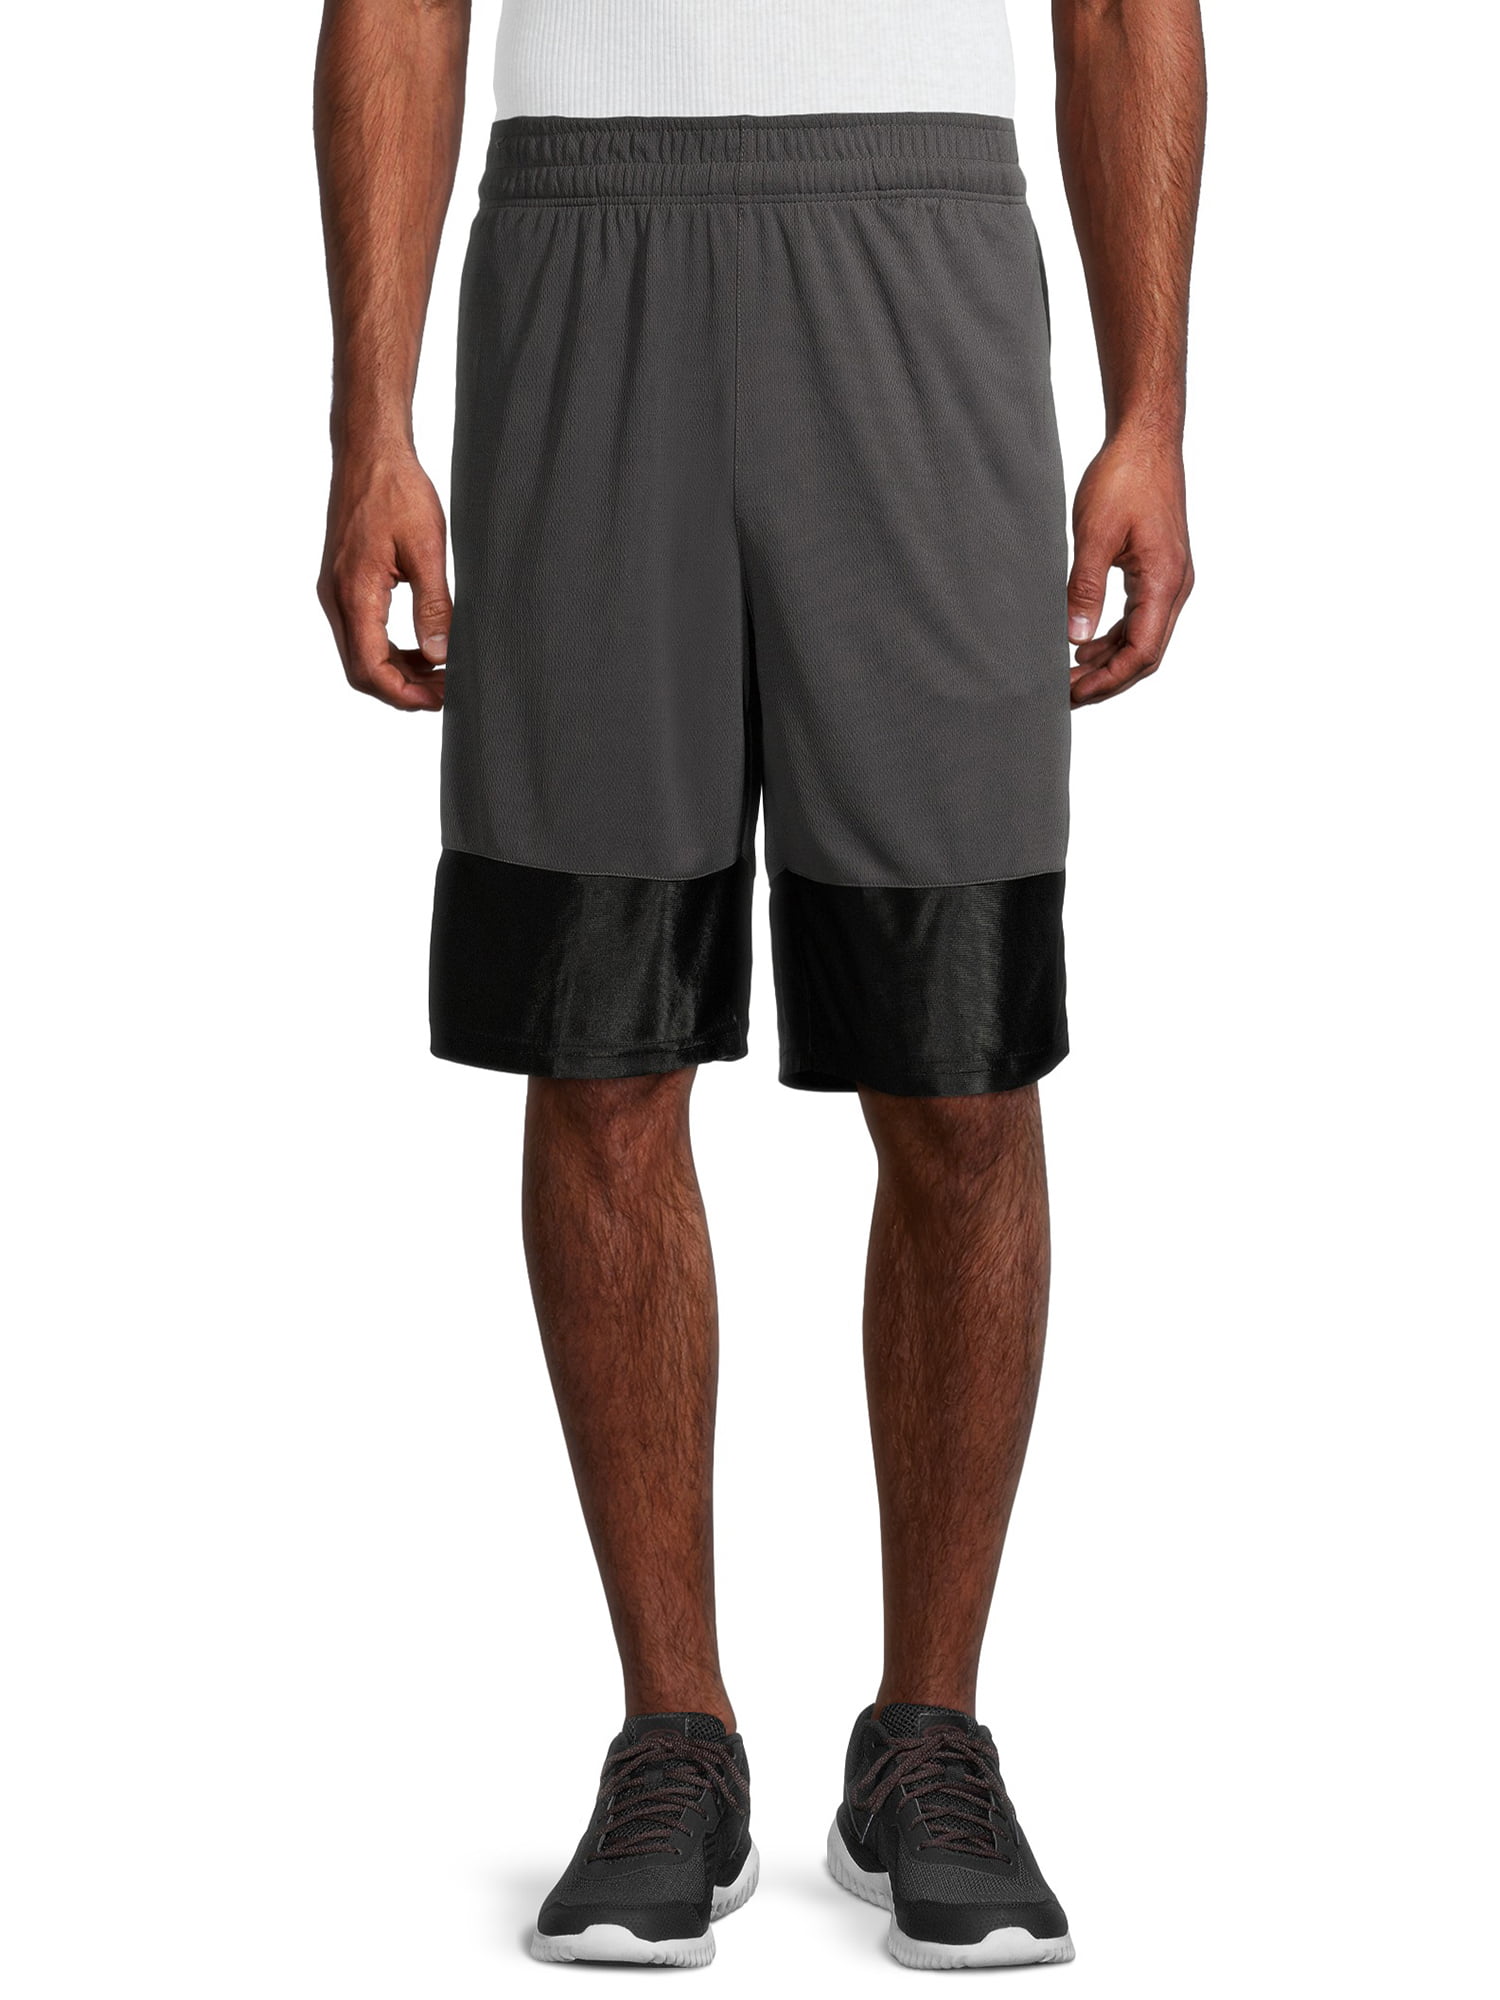 AL1VE Men's Side Striped Splinter Mesh Basketball Shorts - Walmart.com